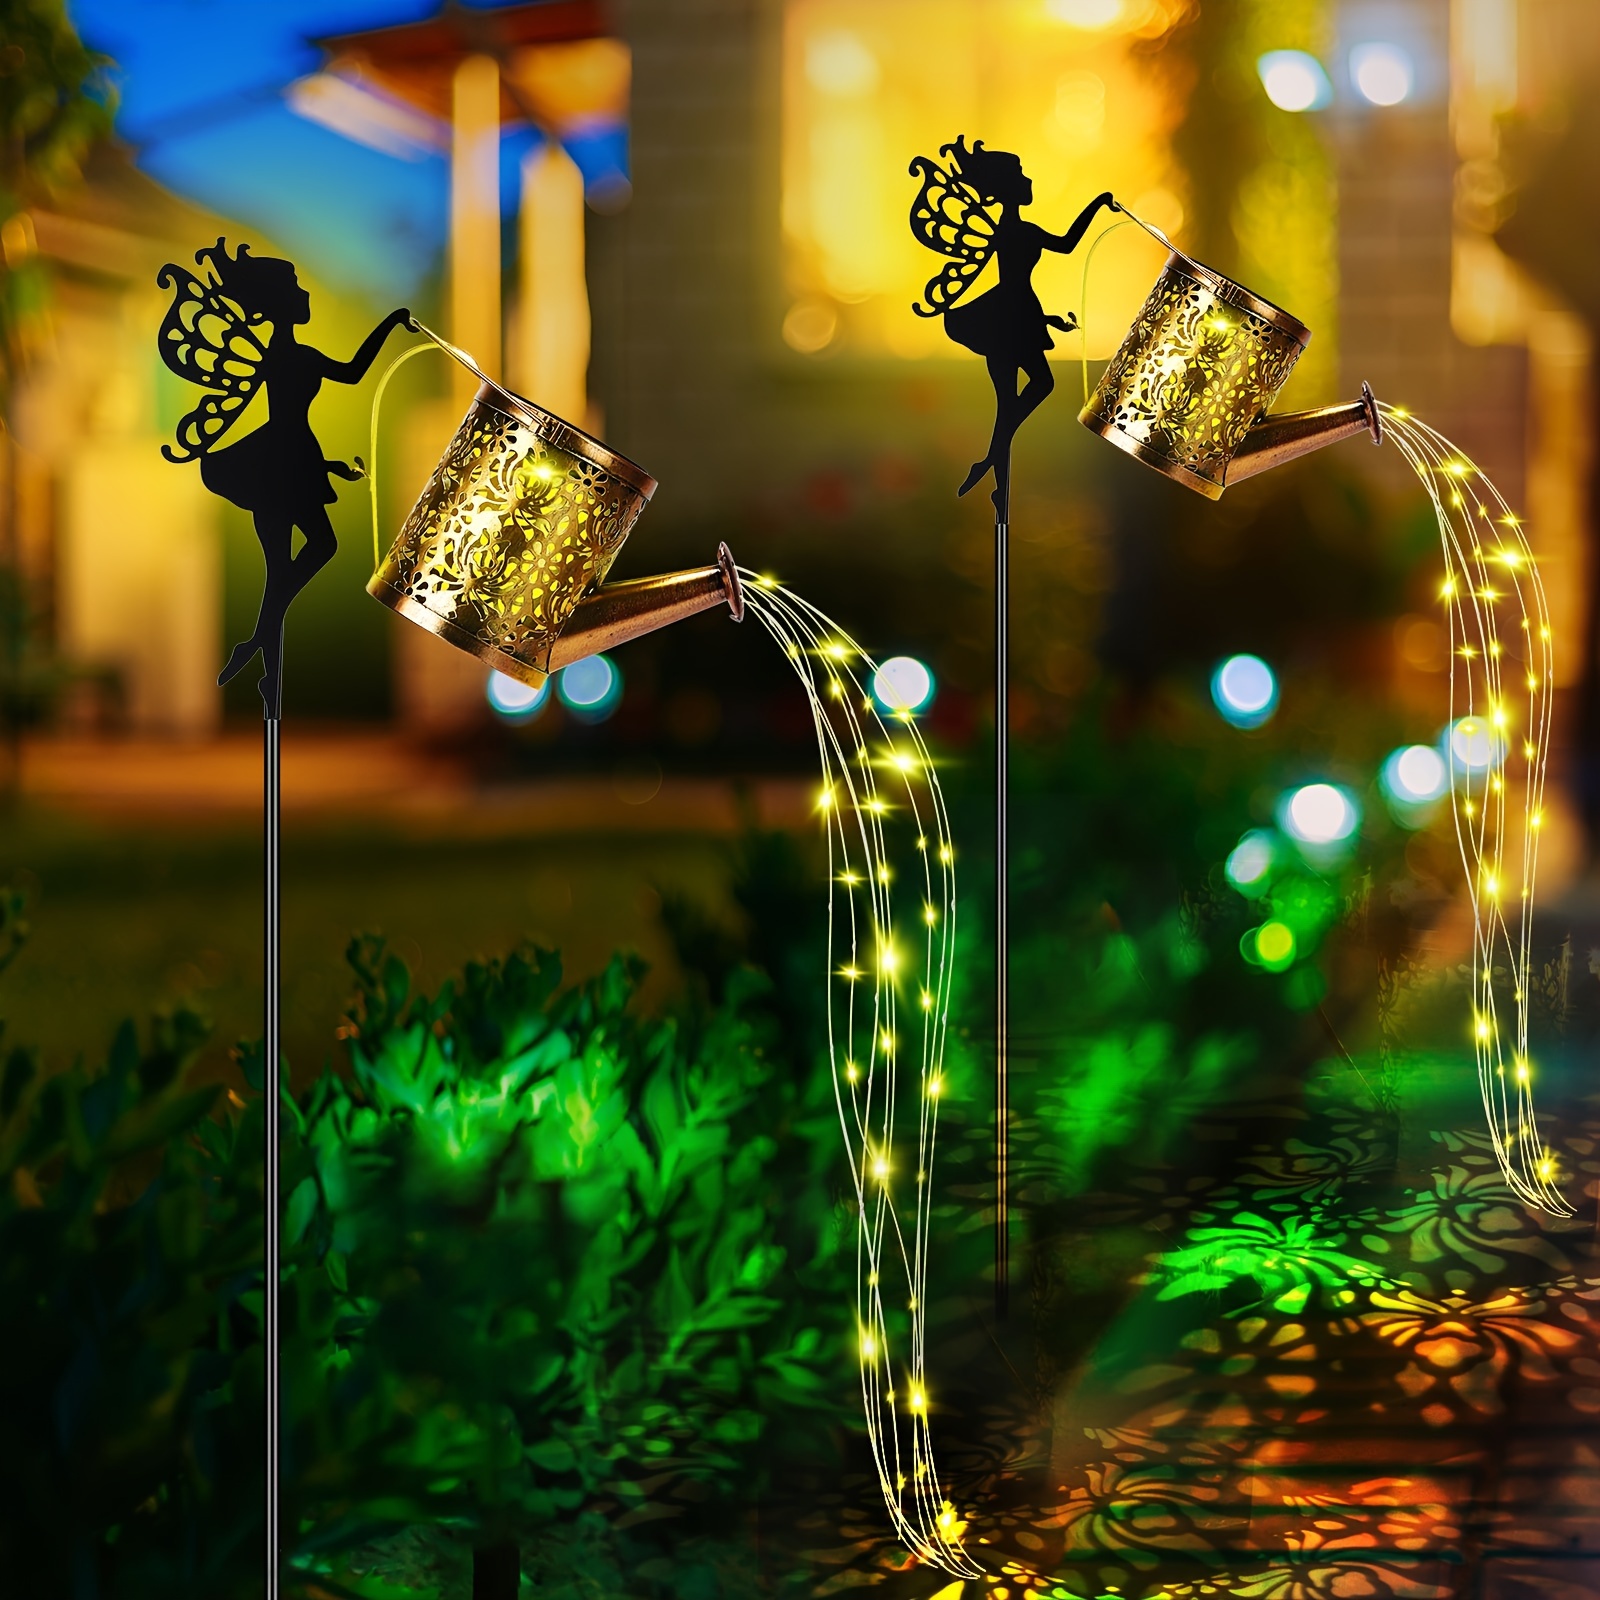 

1pc Solar Watering Can With Light, Retro Metal Hanging Solar Lantern With String Lights, Solar Lanterns Outdoor Garden Decor, Star Art Lamp Decorative For Walkway Backyard Patio Lawn